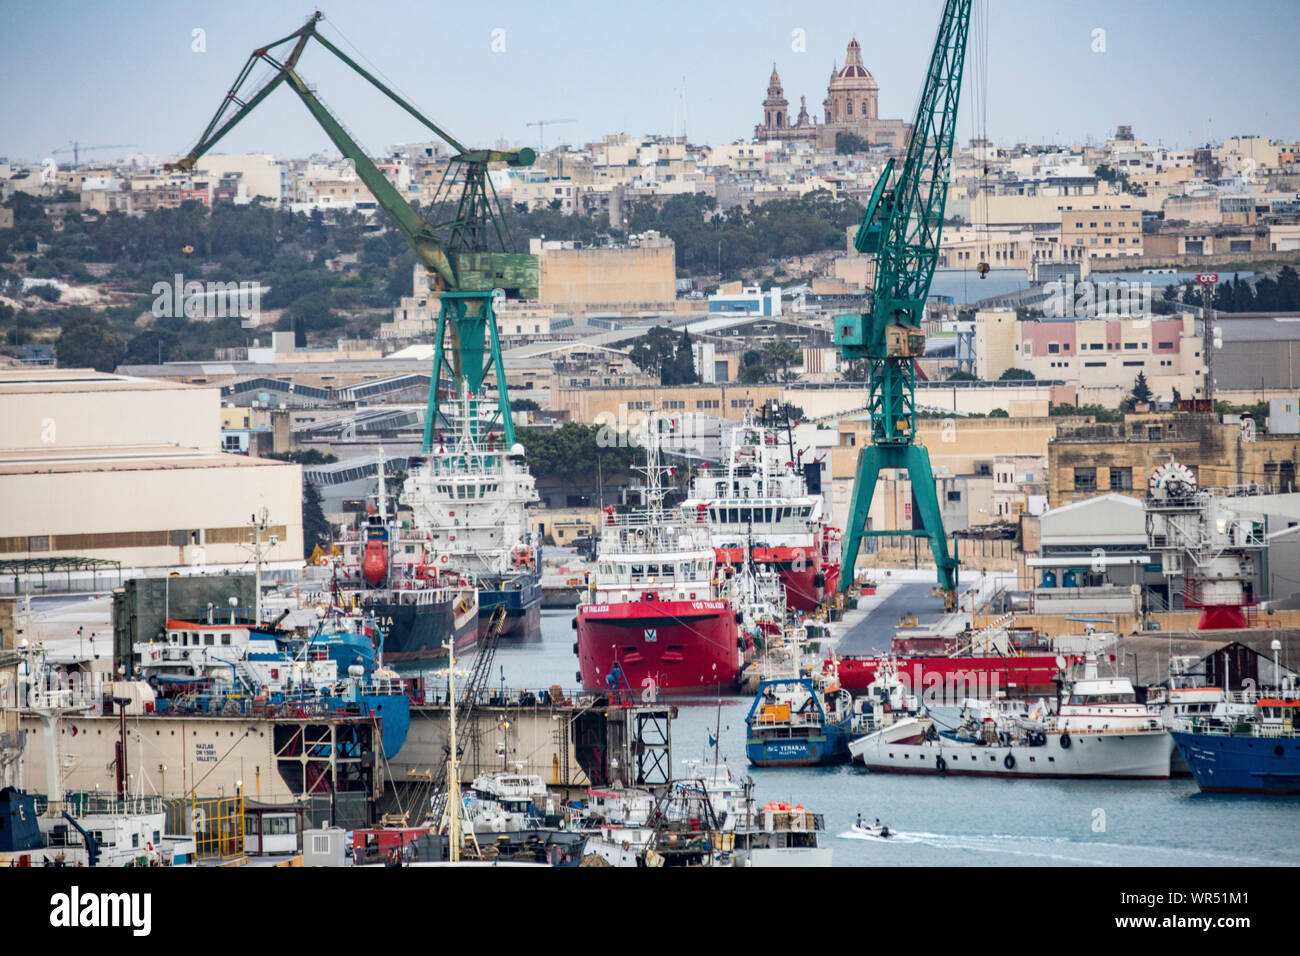 Malta, Grand Harbour, port with shipyards, docks, workshops for ships, Stock Photo